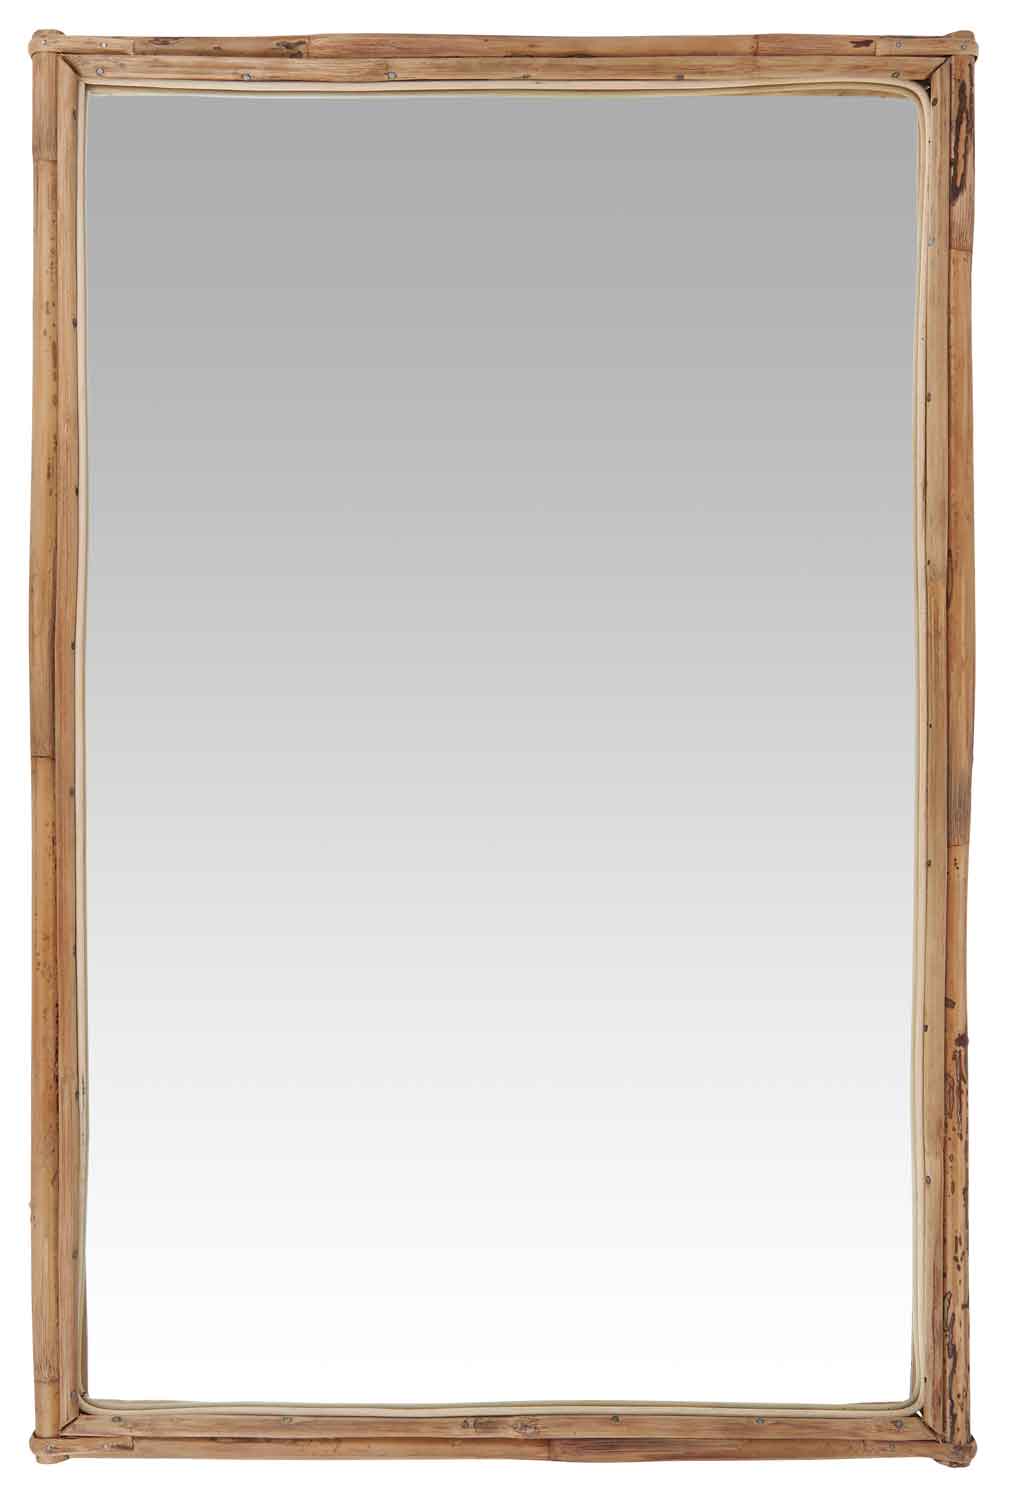 #3 - IB LAURSEN vægspejl - glas/natur spejlglas/bambustræ, rektangulær (75,5x49,5) (inaktiv - 2 pr. kolli